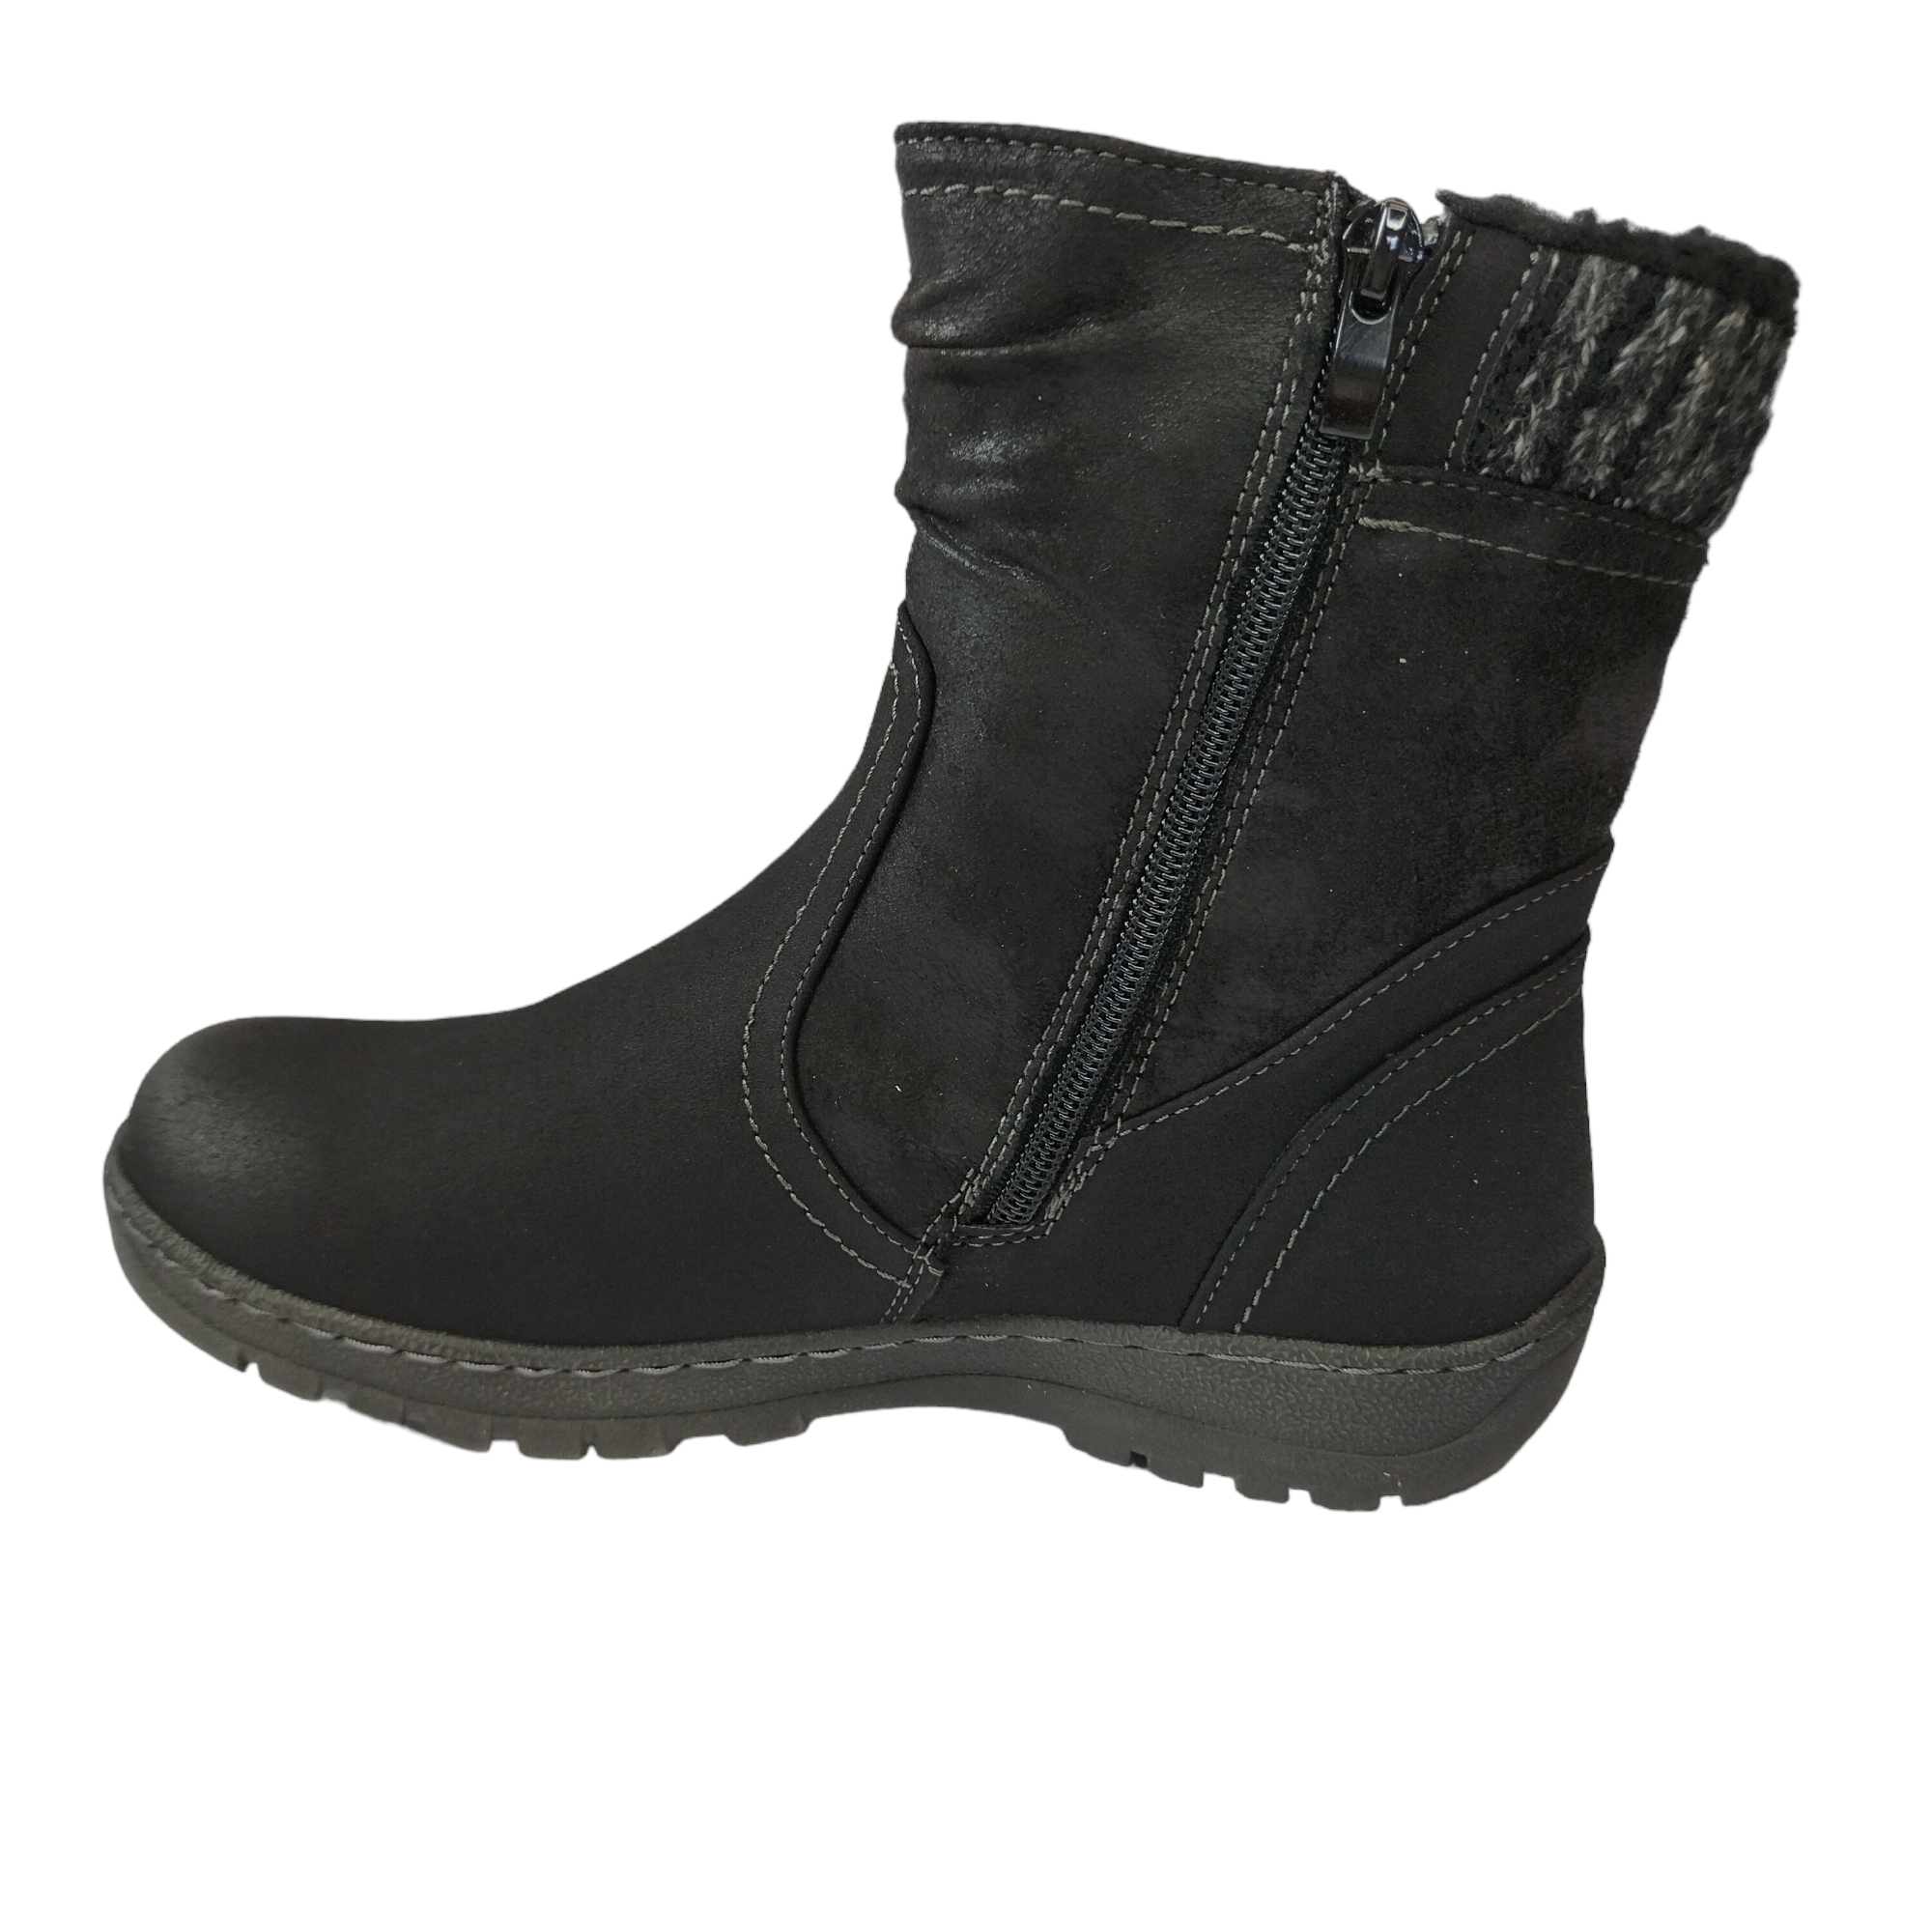 Glenda - shoe&amp;me - CC Resorts - Boot - Boots, Winter, Womens